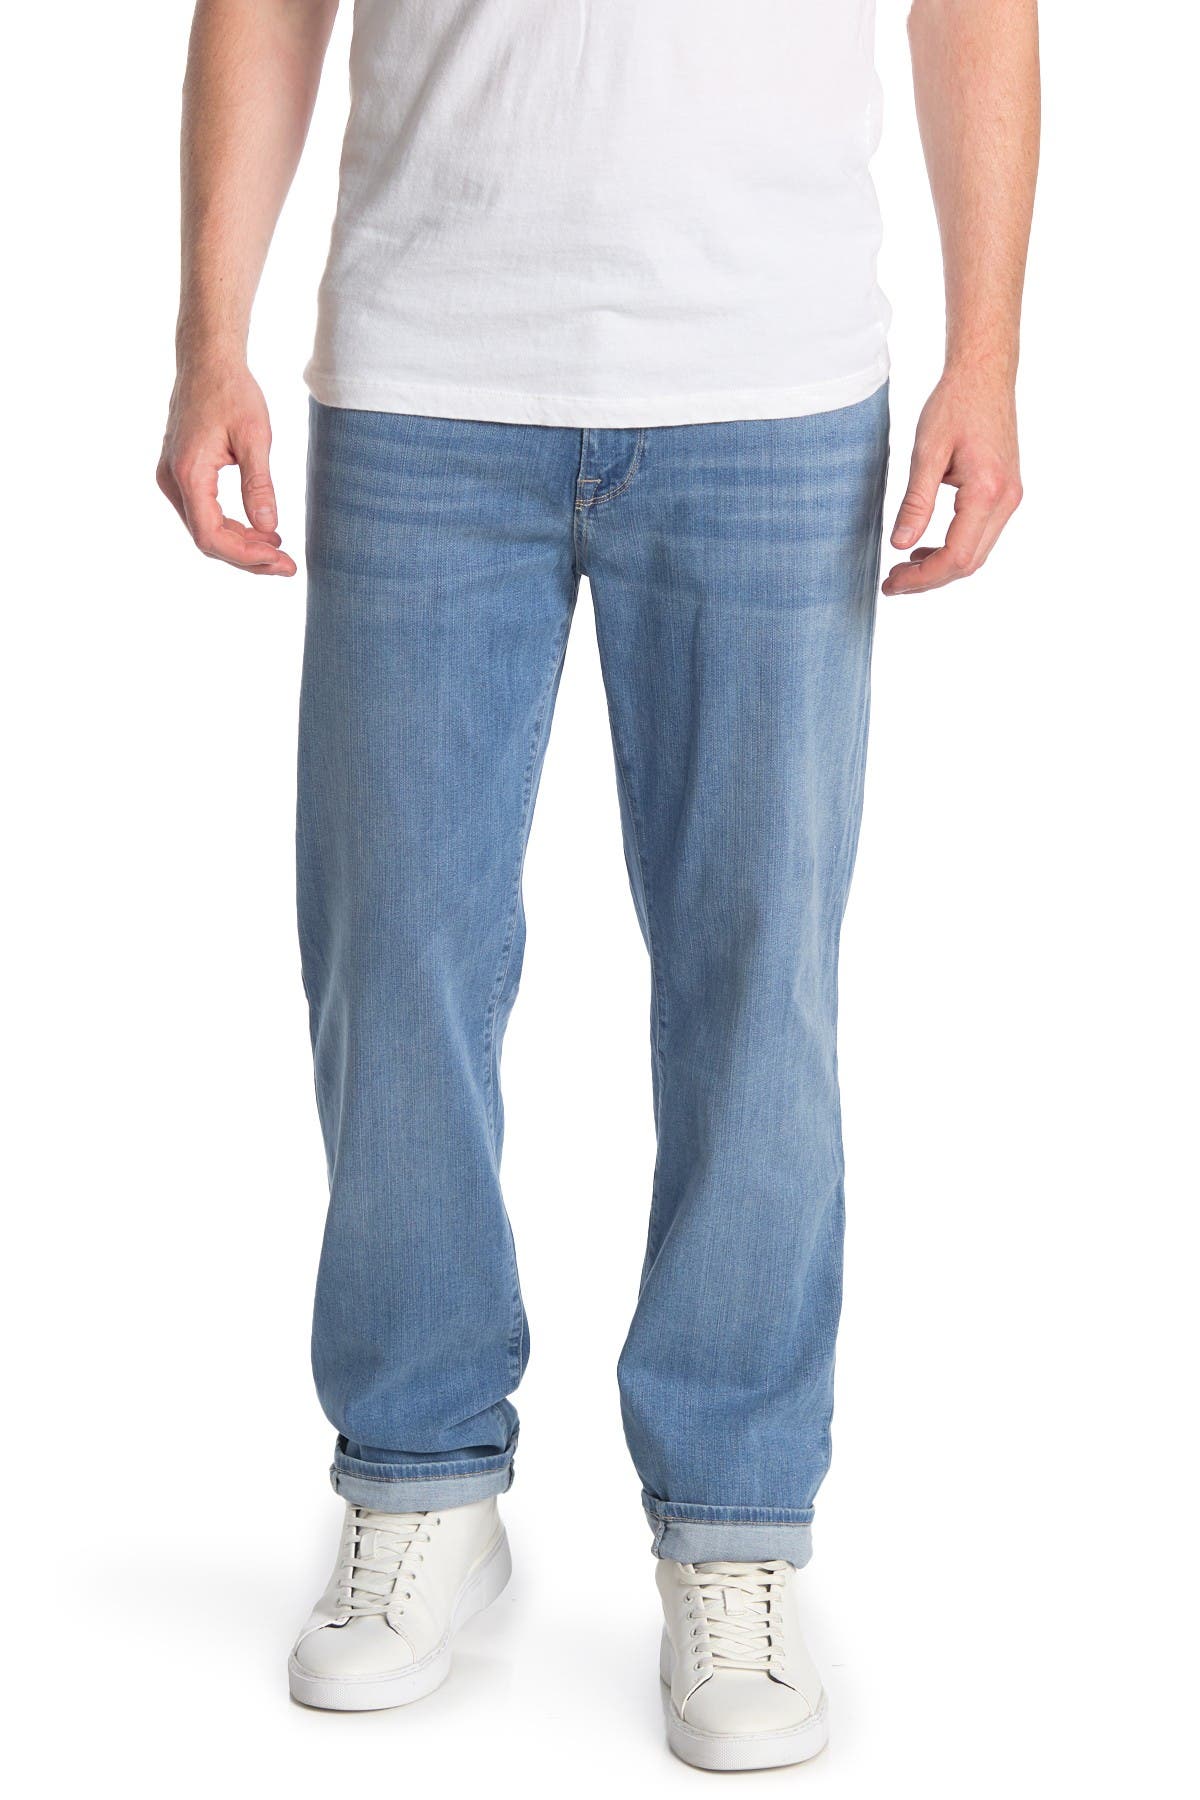 34 heritage jeans nordstrom rack